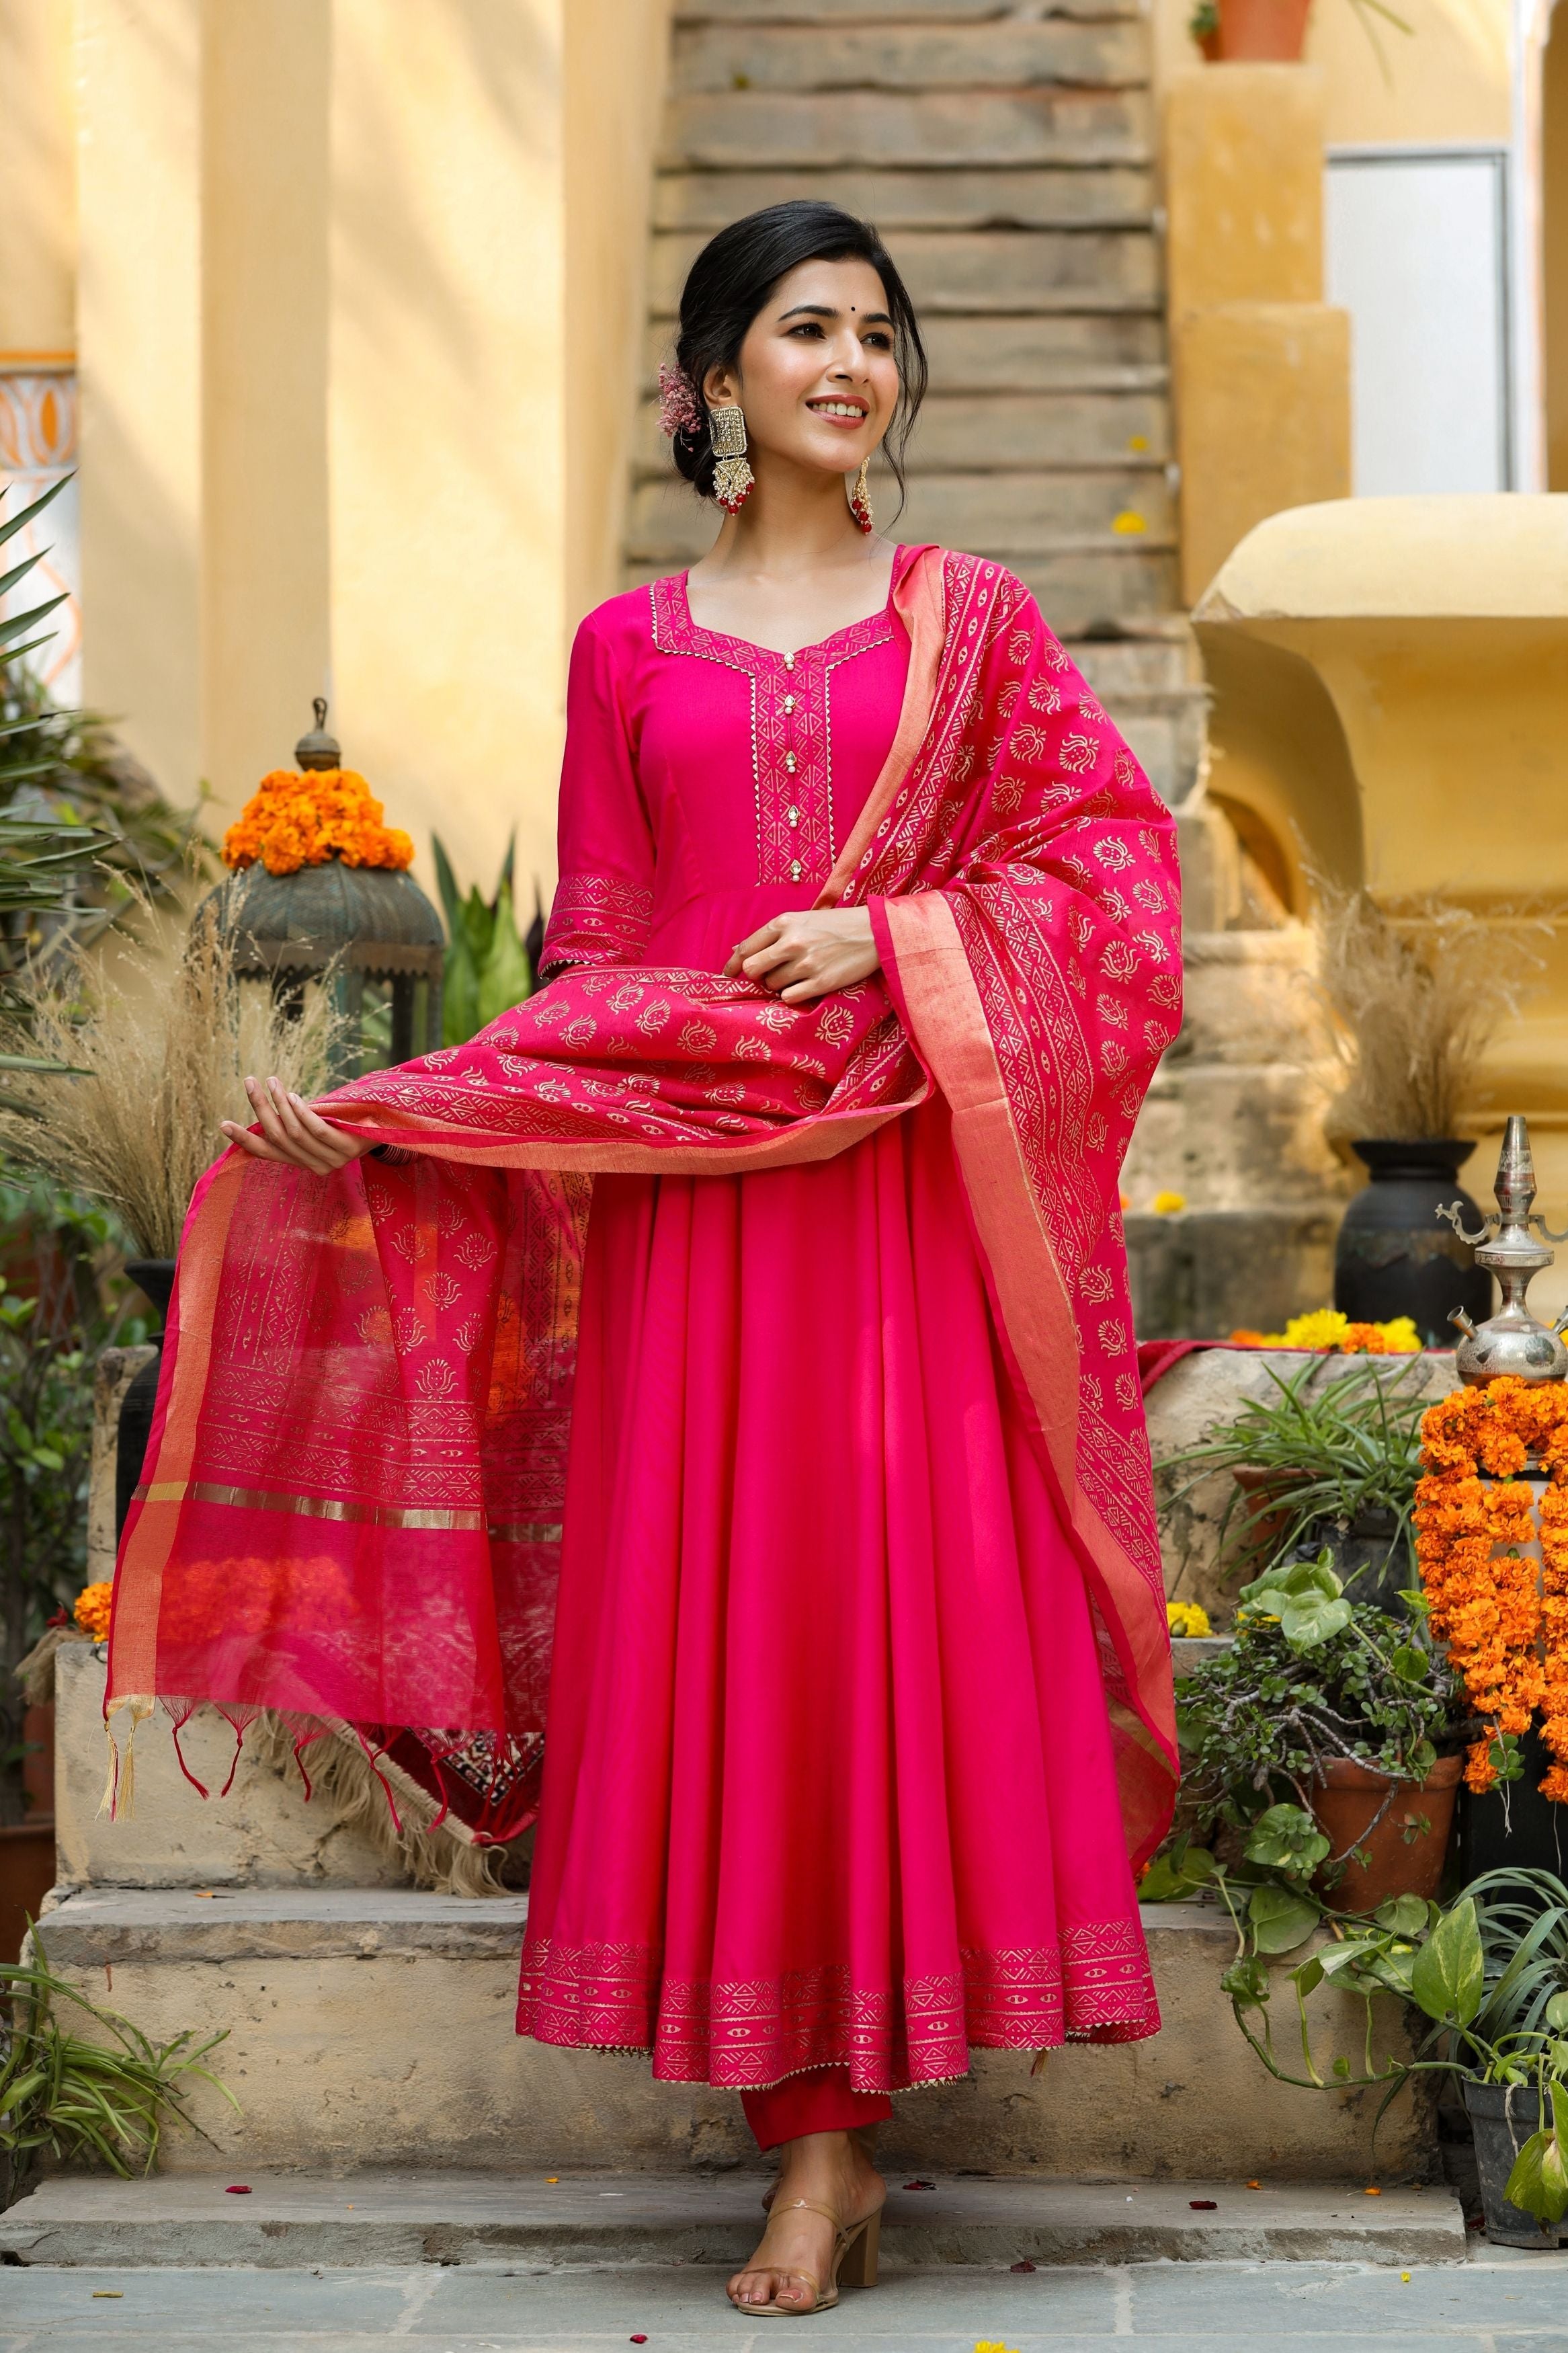 M-Preet | Punjabi girls, Beautiful girls dresses, Patiala suit designs